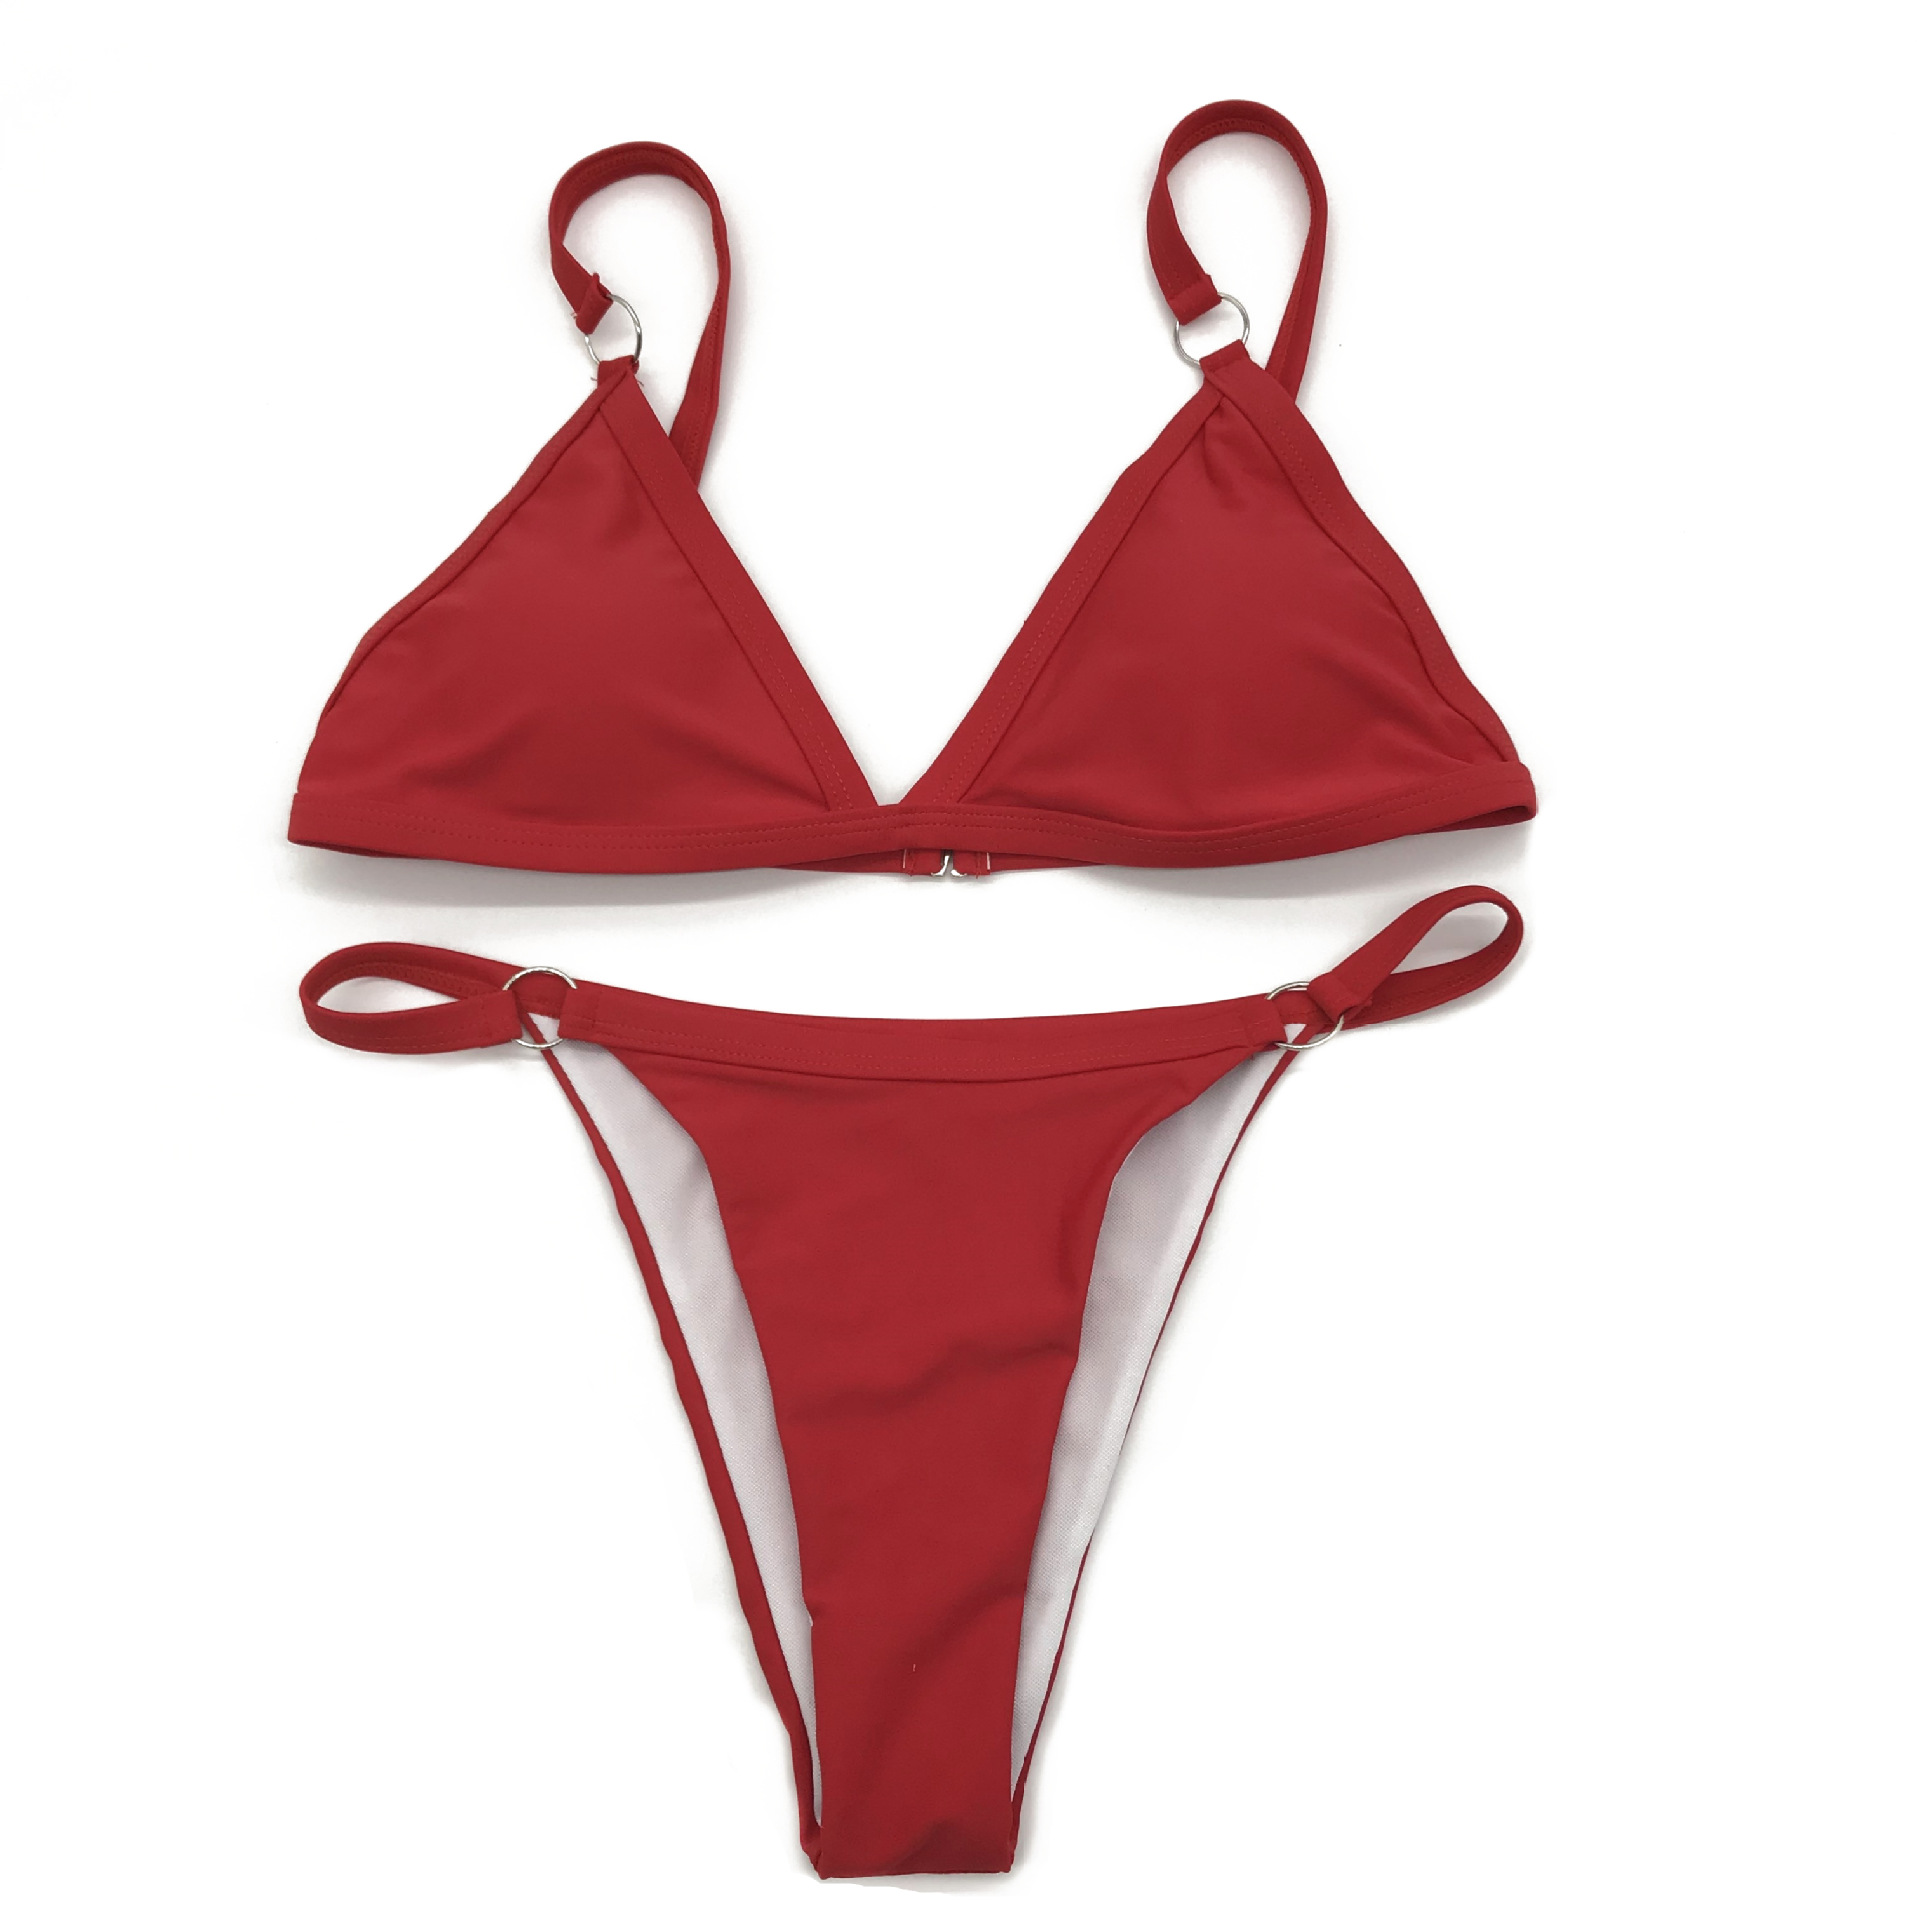 Red triangle bikini fashion stores wholesale drop shipping 